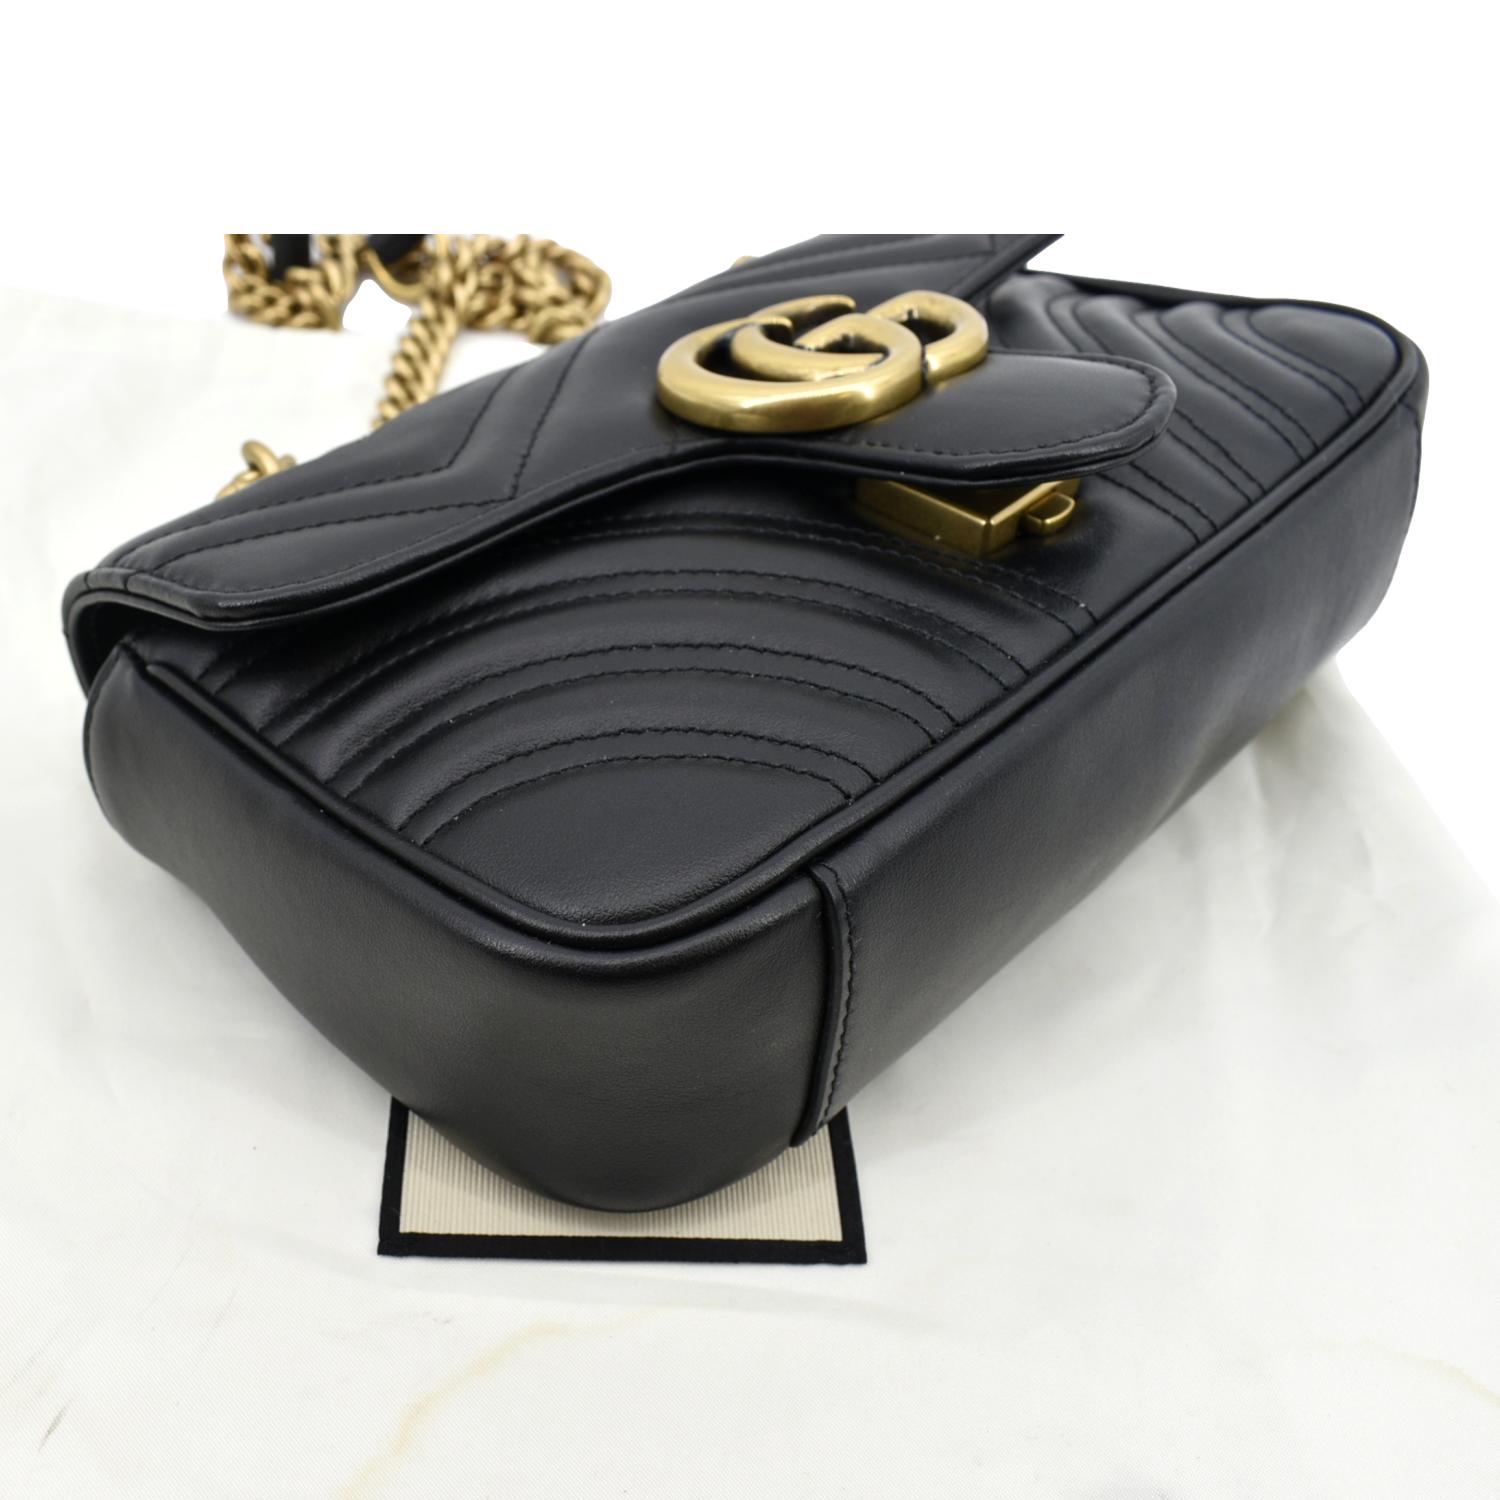 Gucci: Black Small GG Marmont Shoulder Bag